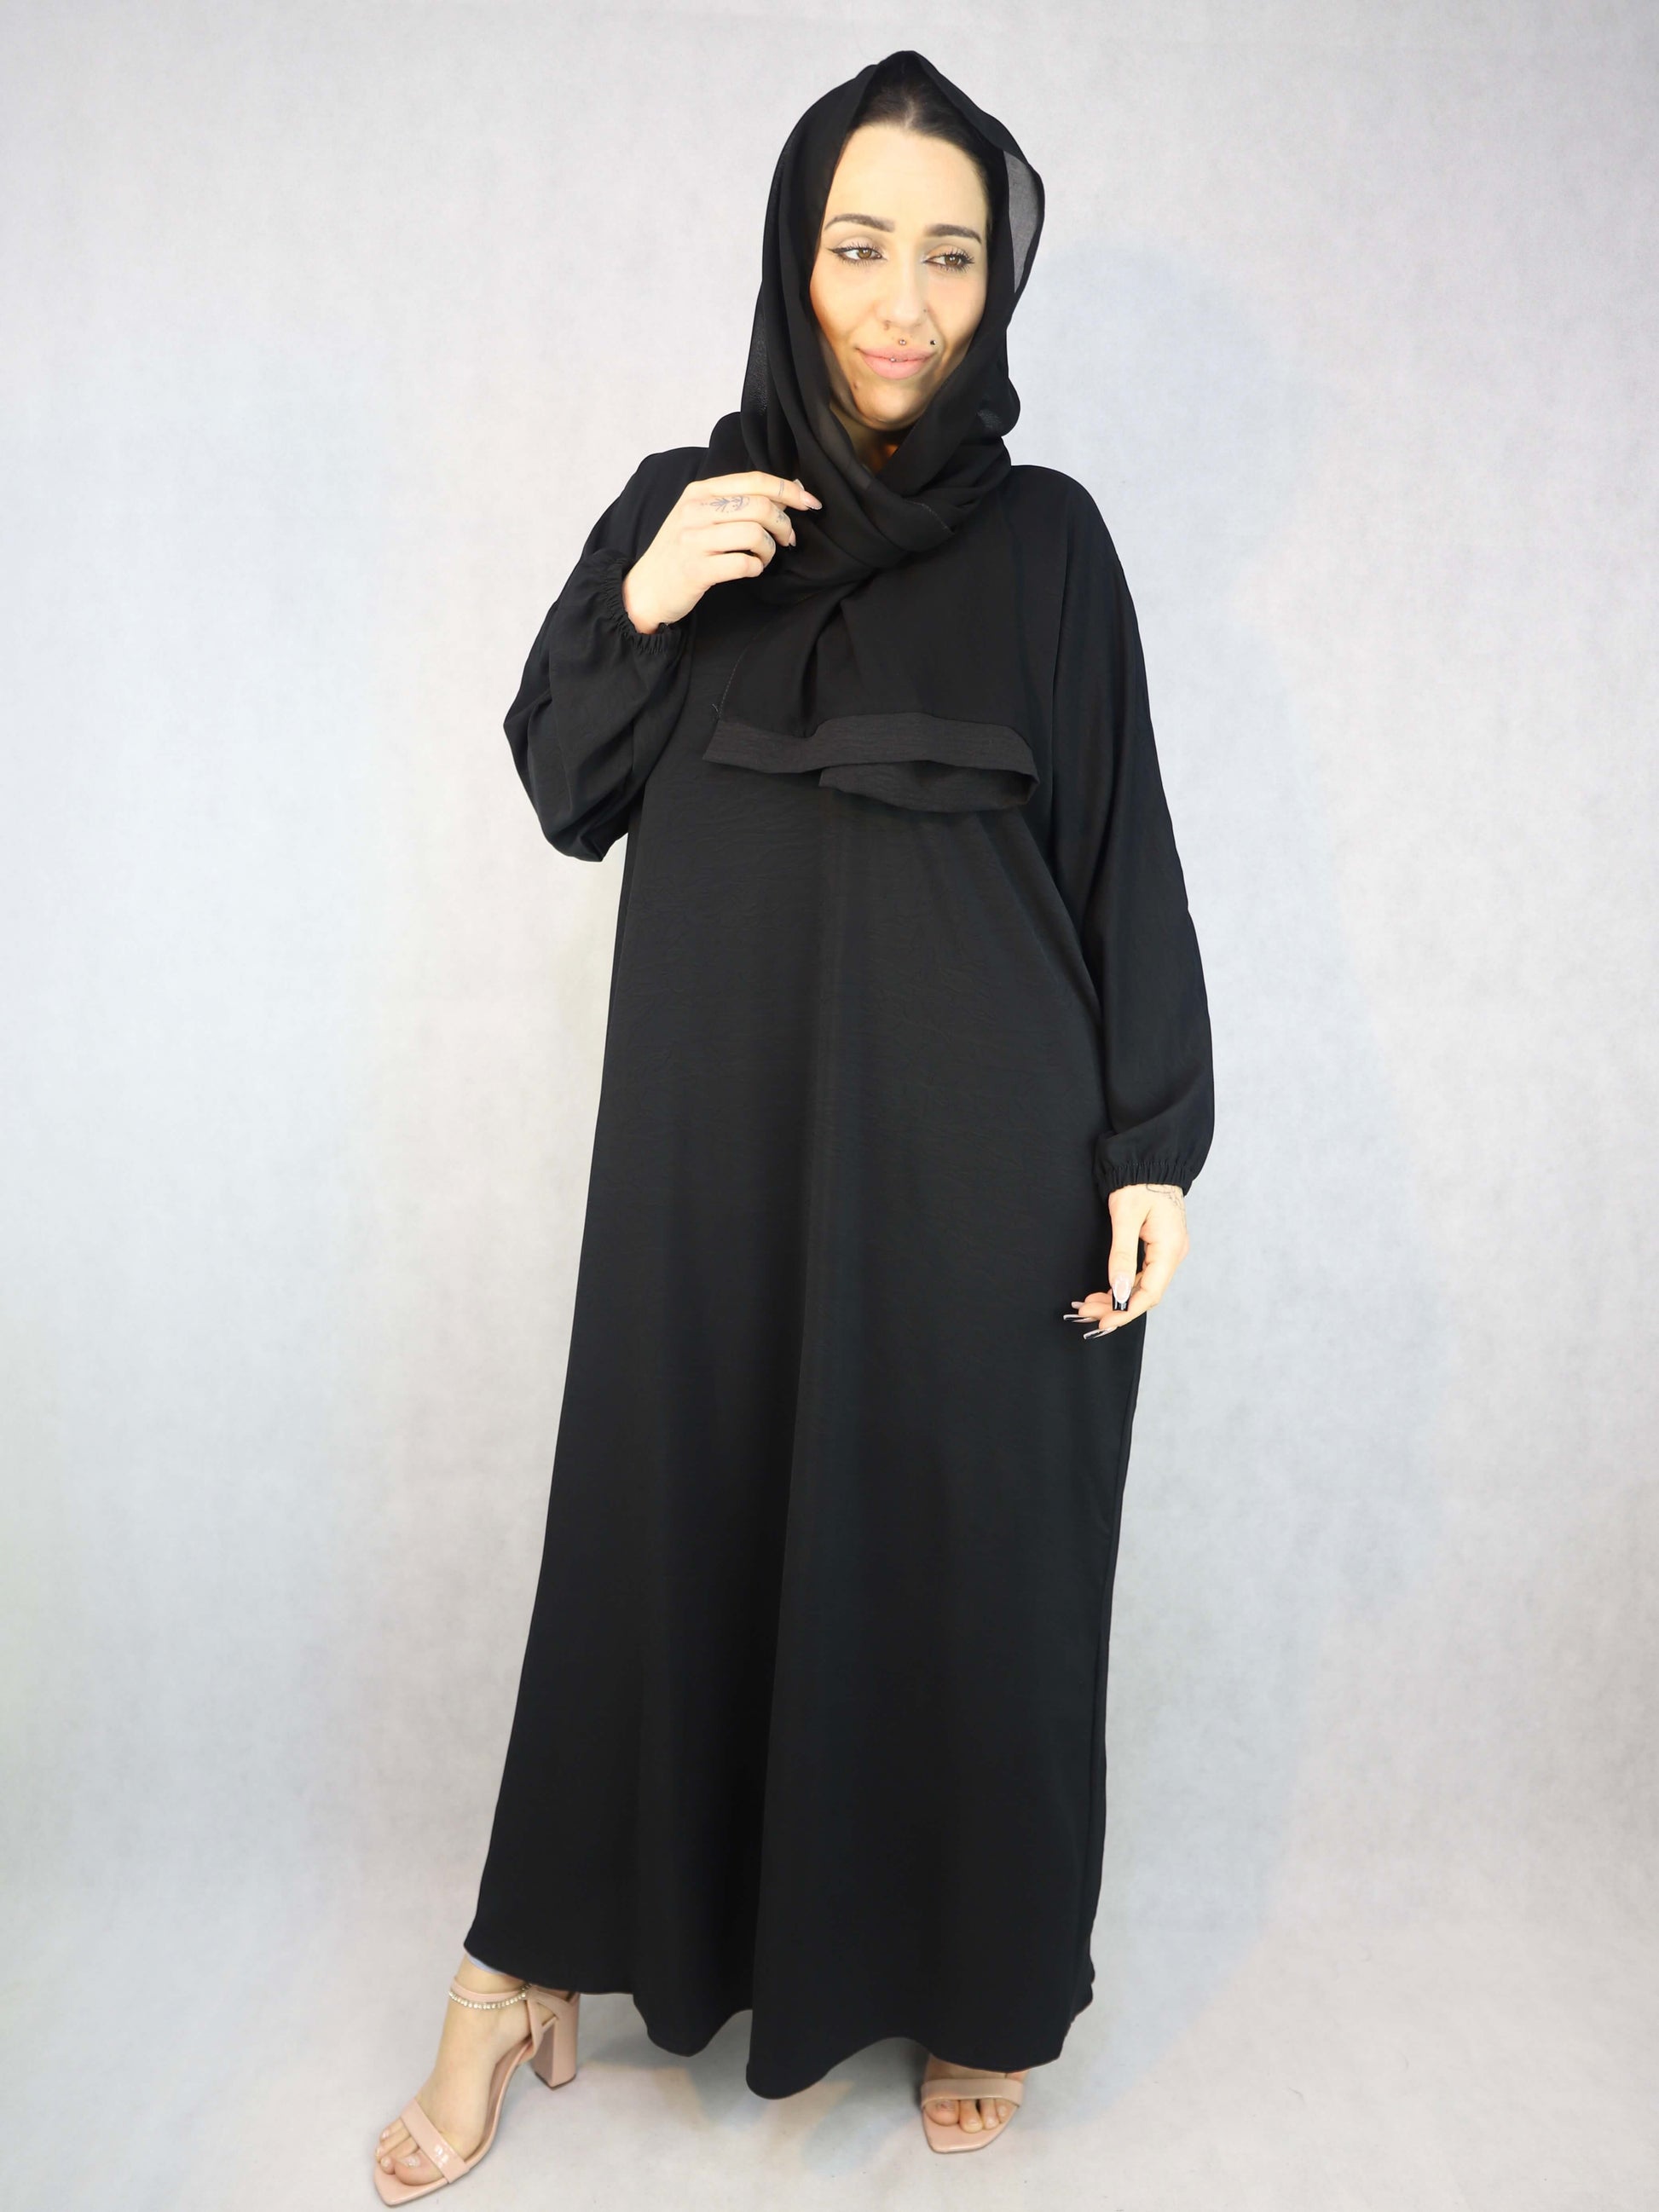 Marble Effect Black Colour Abaya Modest Dress.